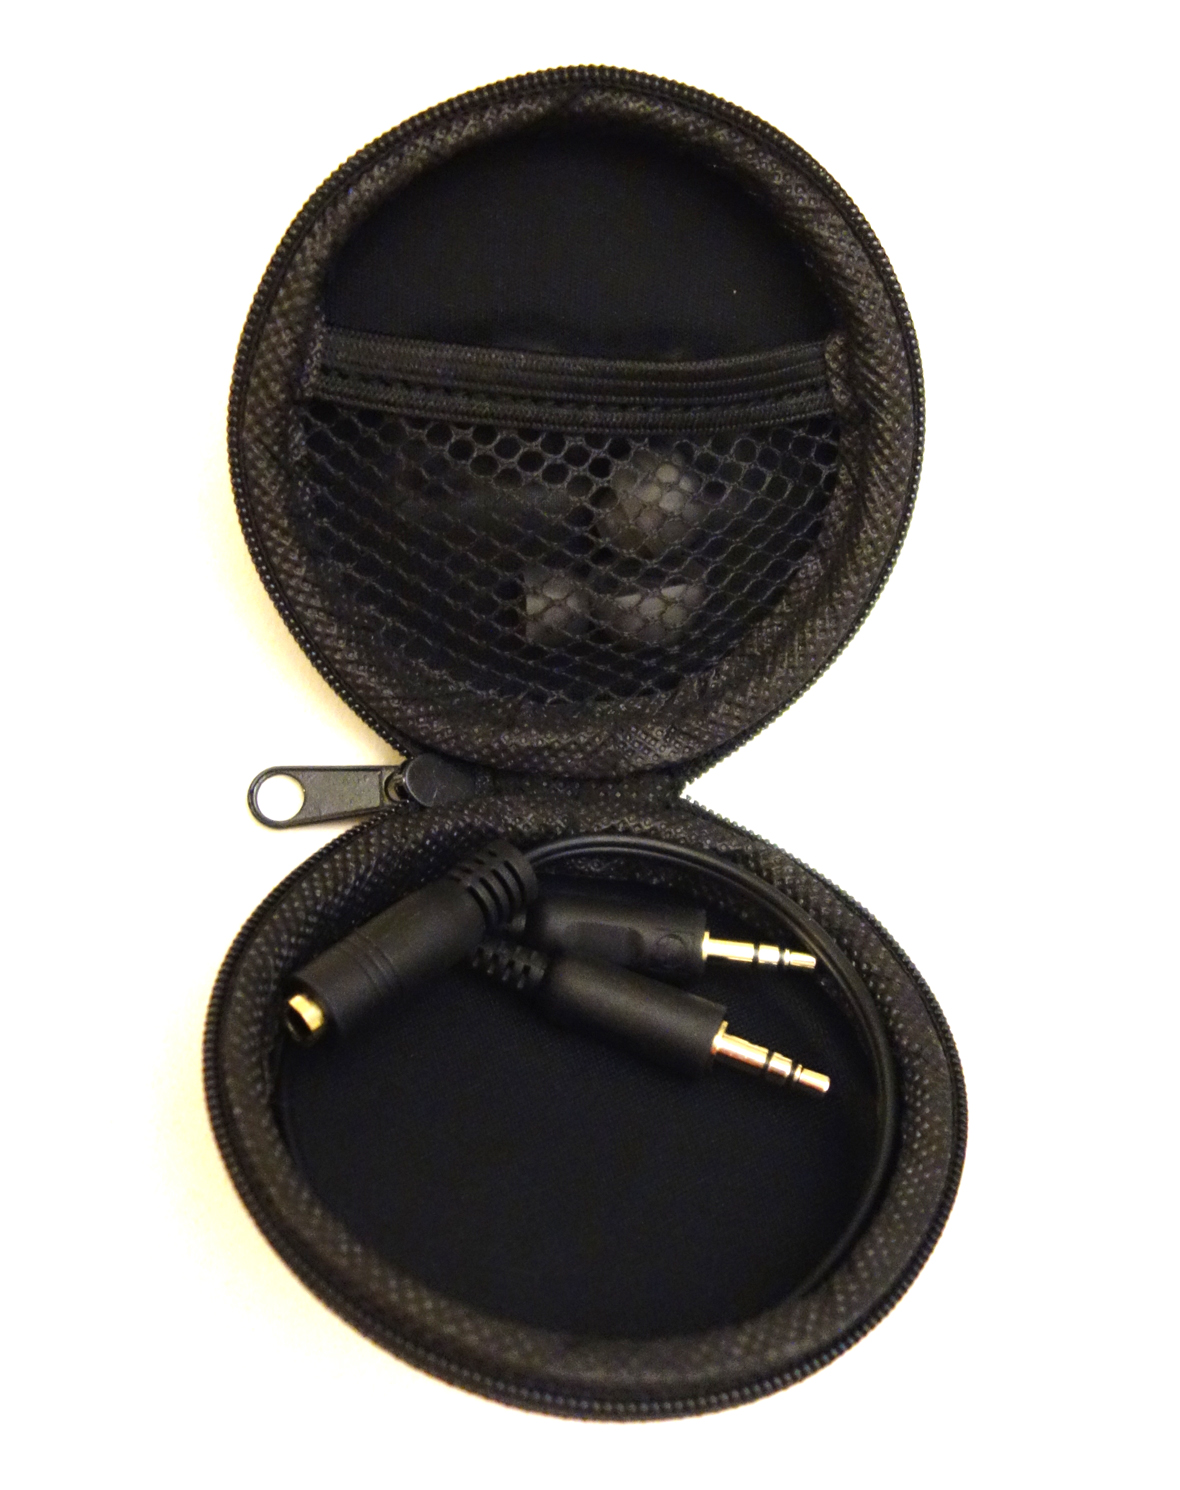 Creative Sound BlasterX P5 case open with accessories